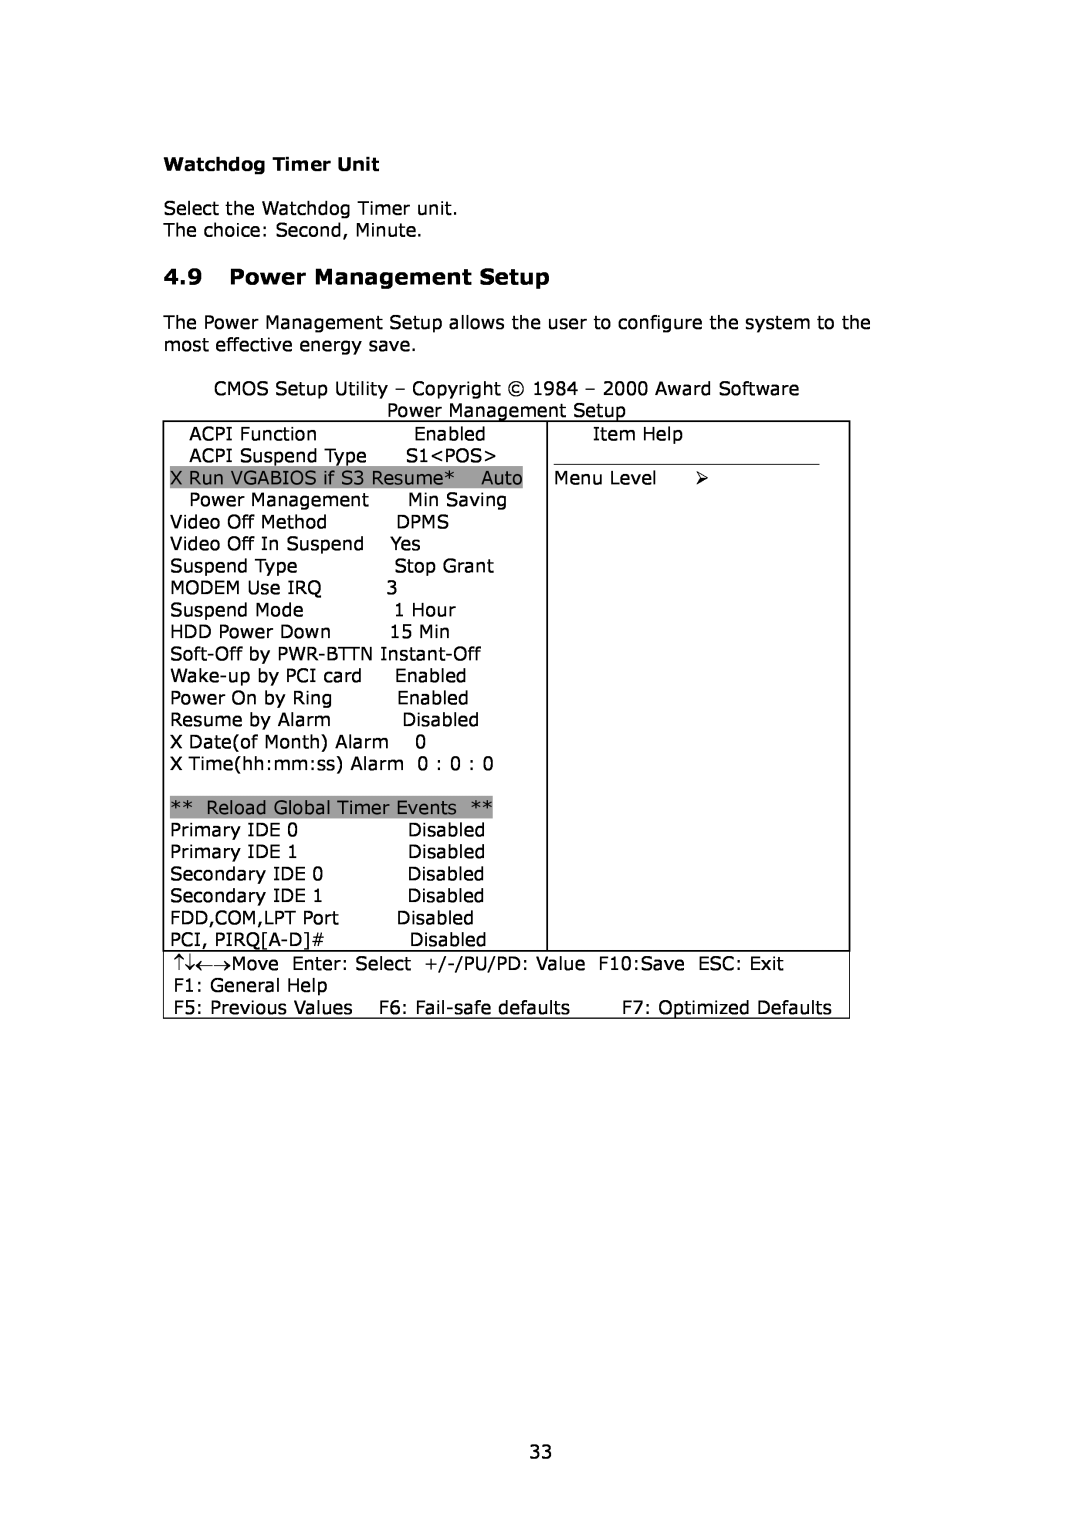 IBM SAGP-845EV user manual Power Management Setup, Watchdog Timer Unit 